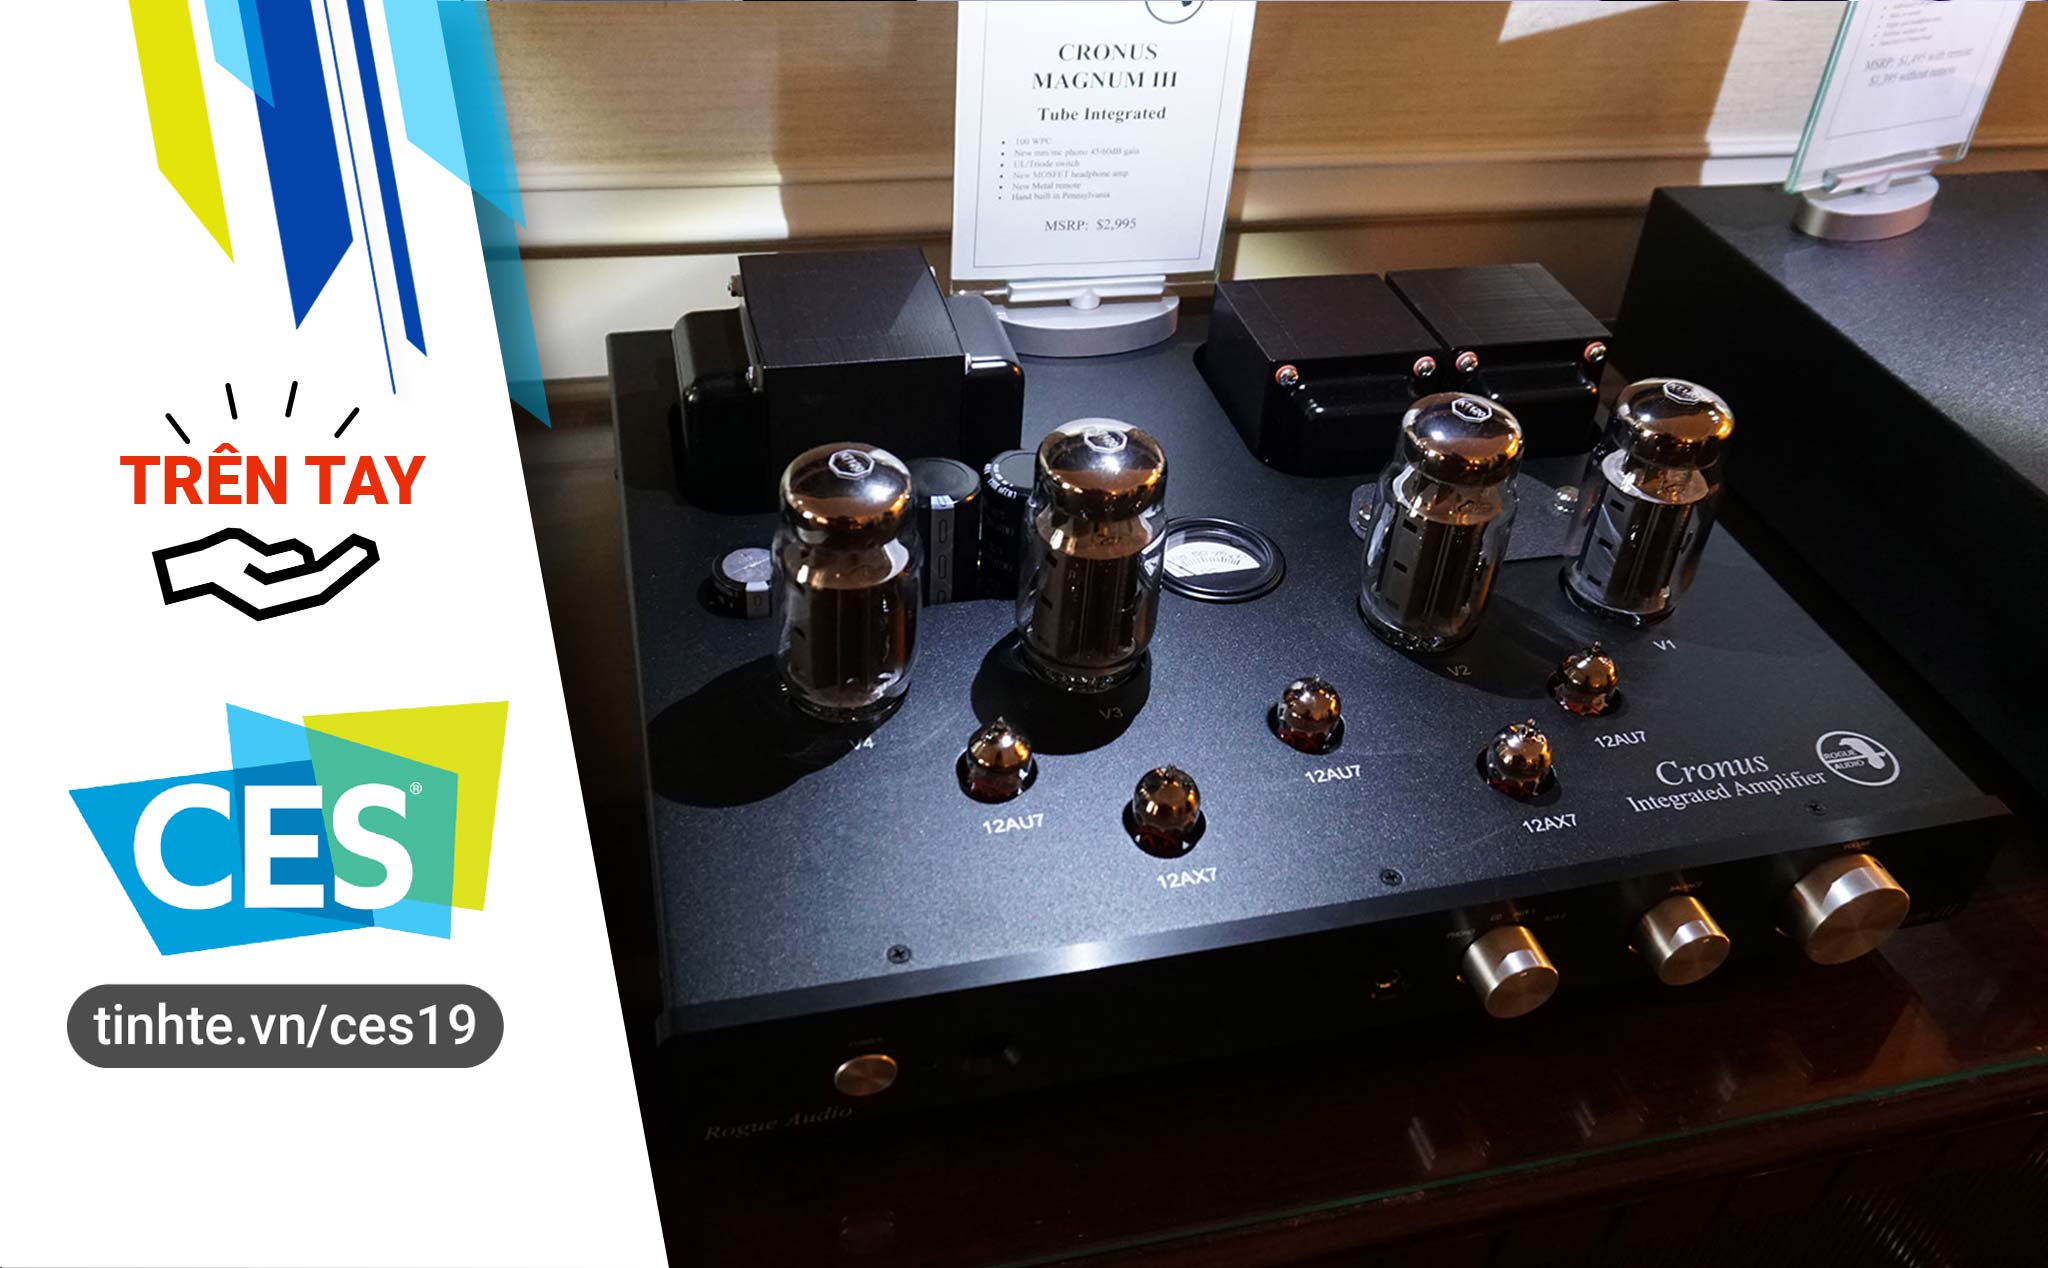 #CES19: Cronus Magnum III - Amplifier đèn tích công suất cao của Rogue Audio ra mắt